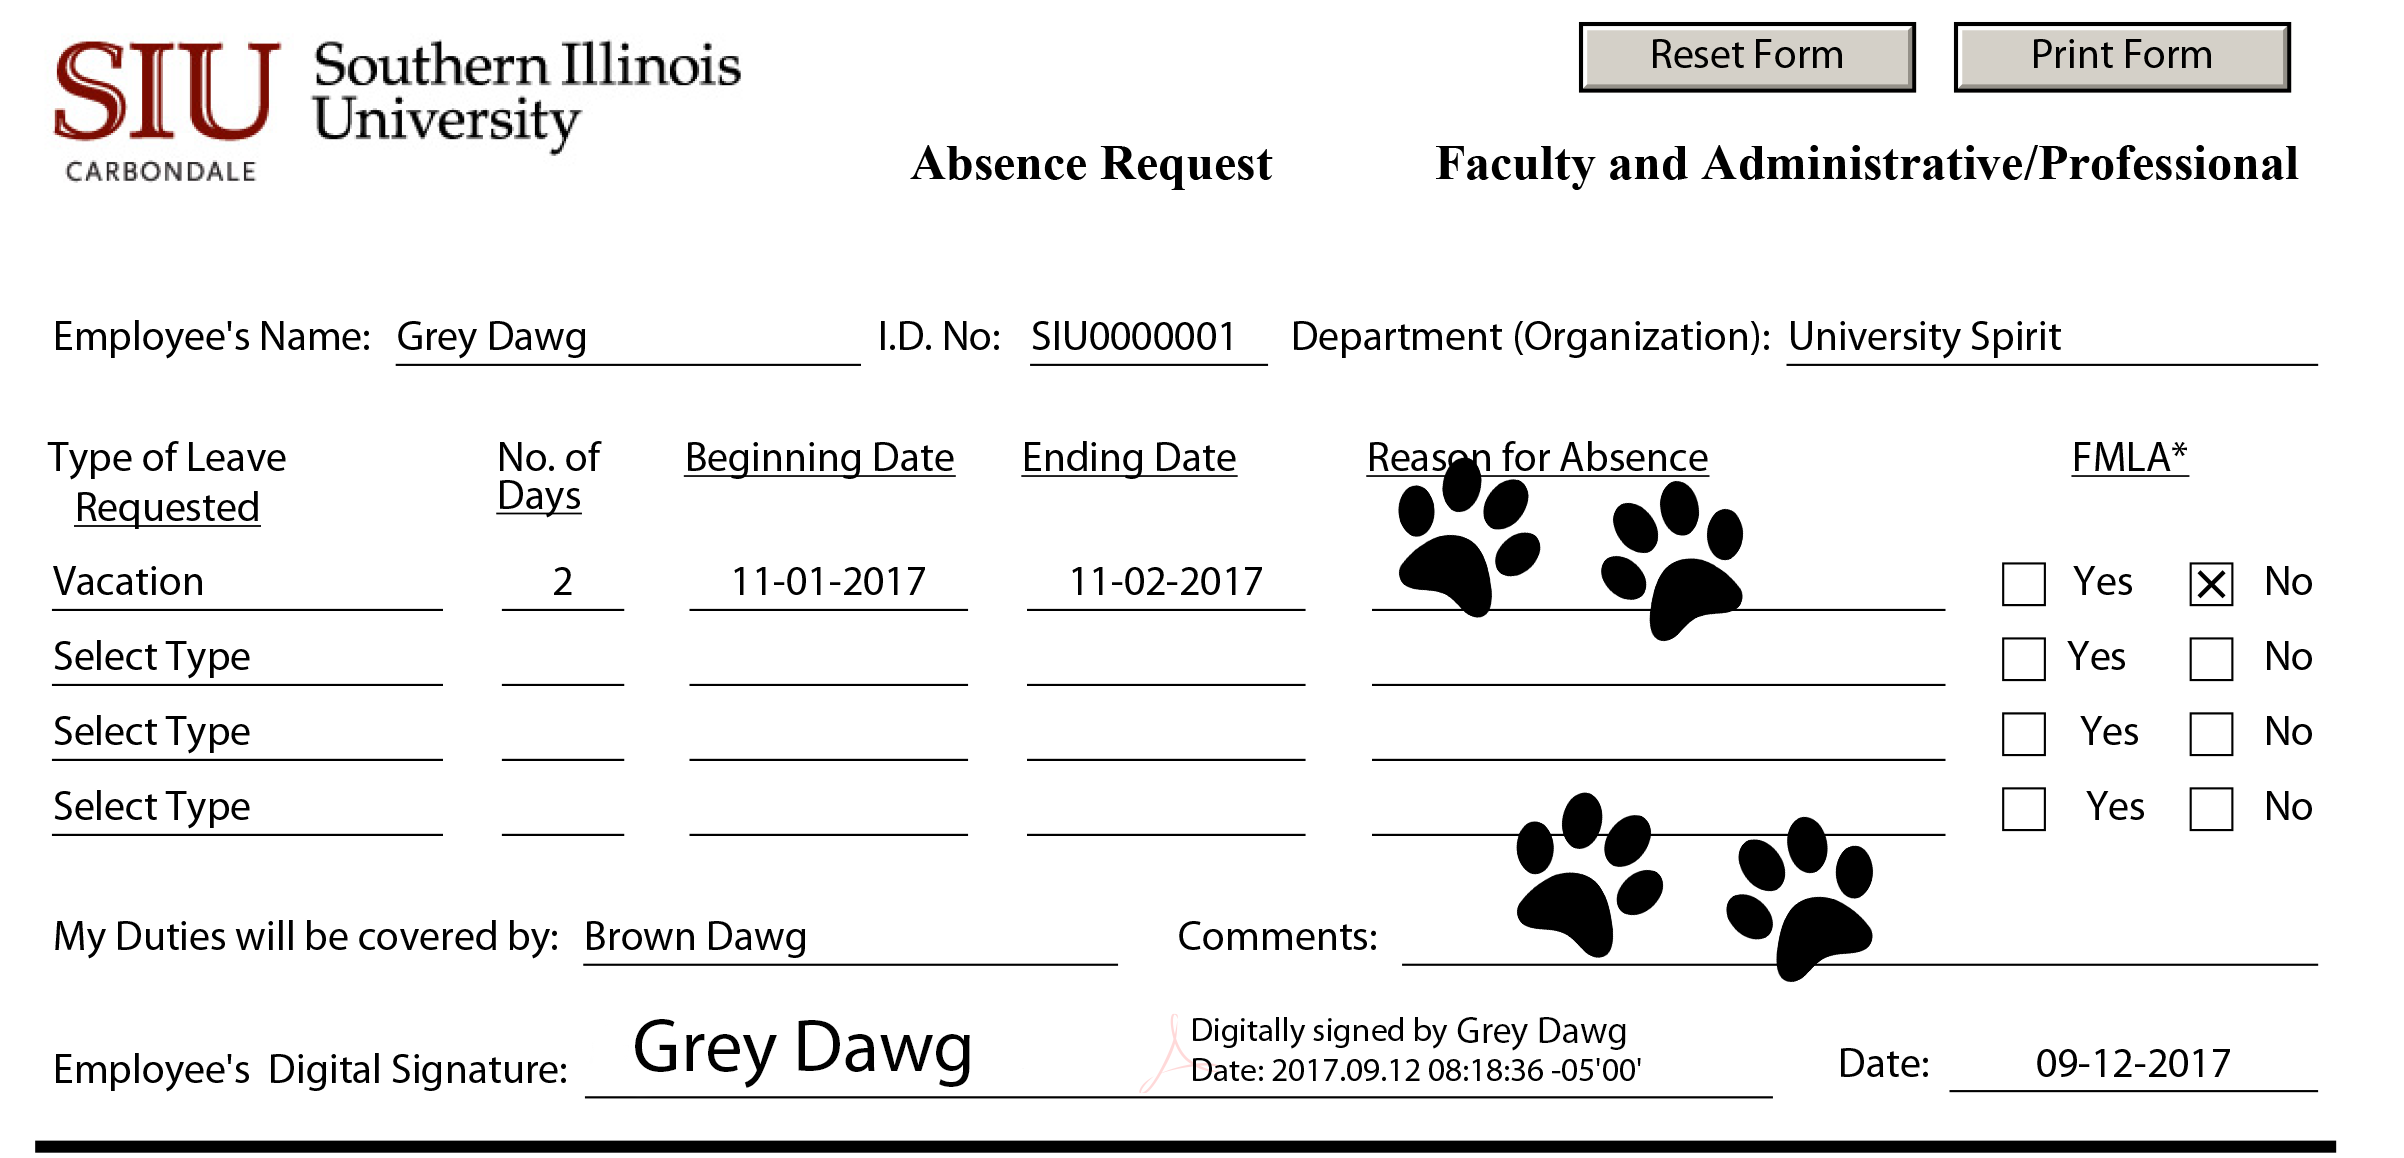 Even Grey Dawg uses a digital signature!